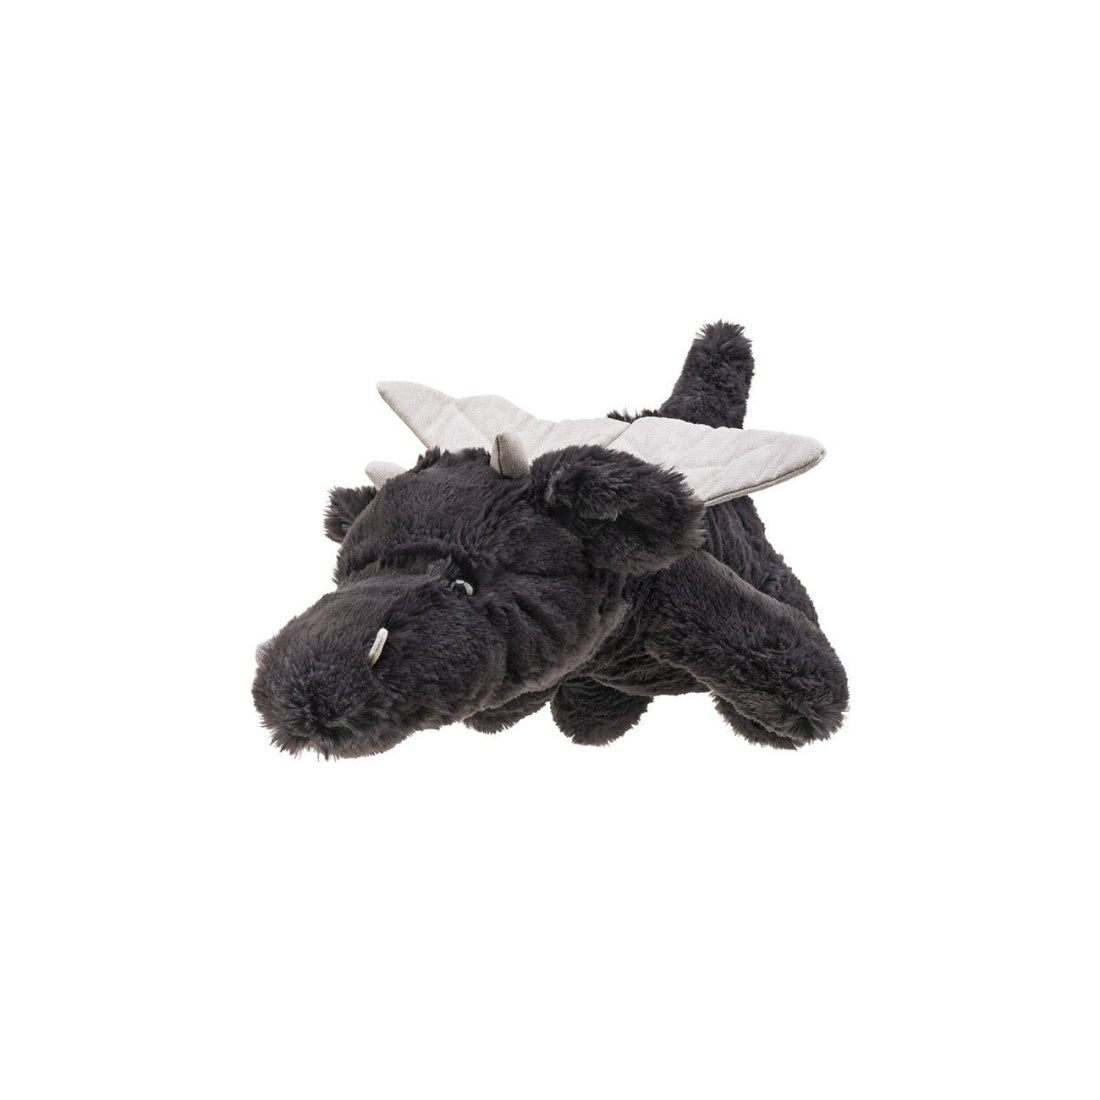 Flying Dragon Black Plush Doll - 0cm